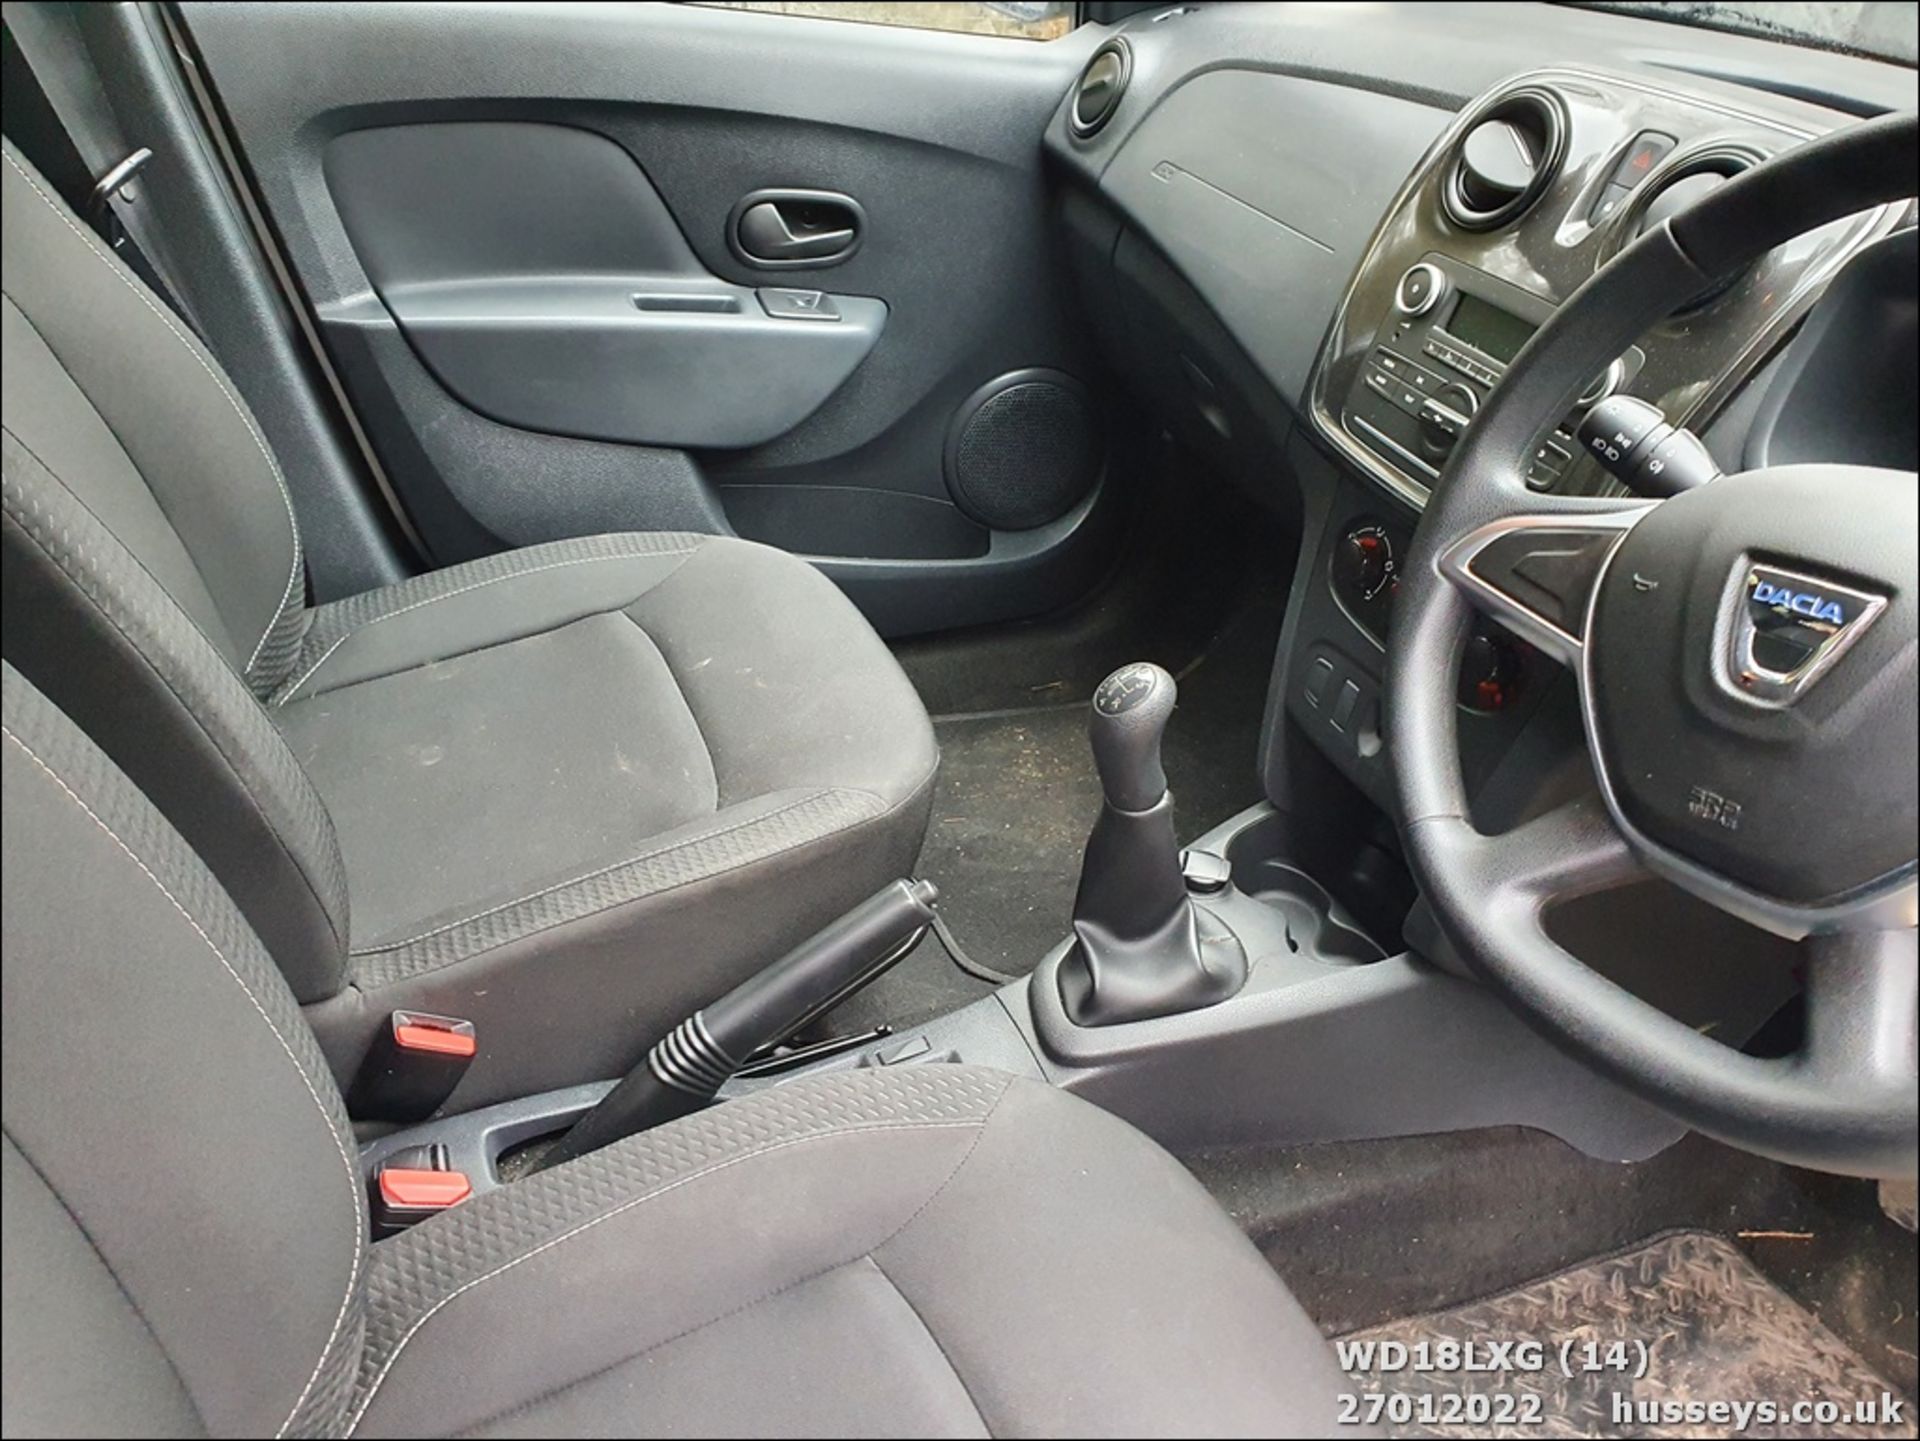 18/18 DACIA SANDERO AMBIANCE SCE - 998cc 5dr Hatchback (White, 60k) - Image 15 of 22